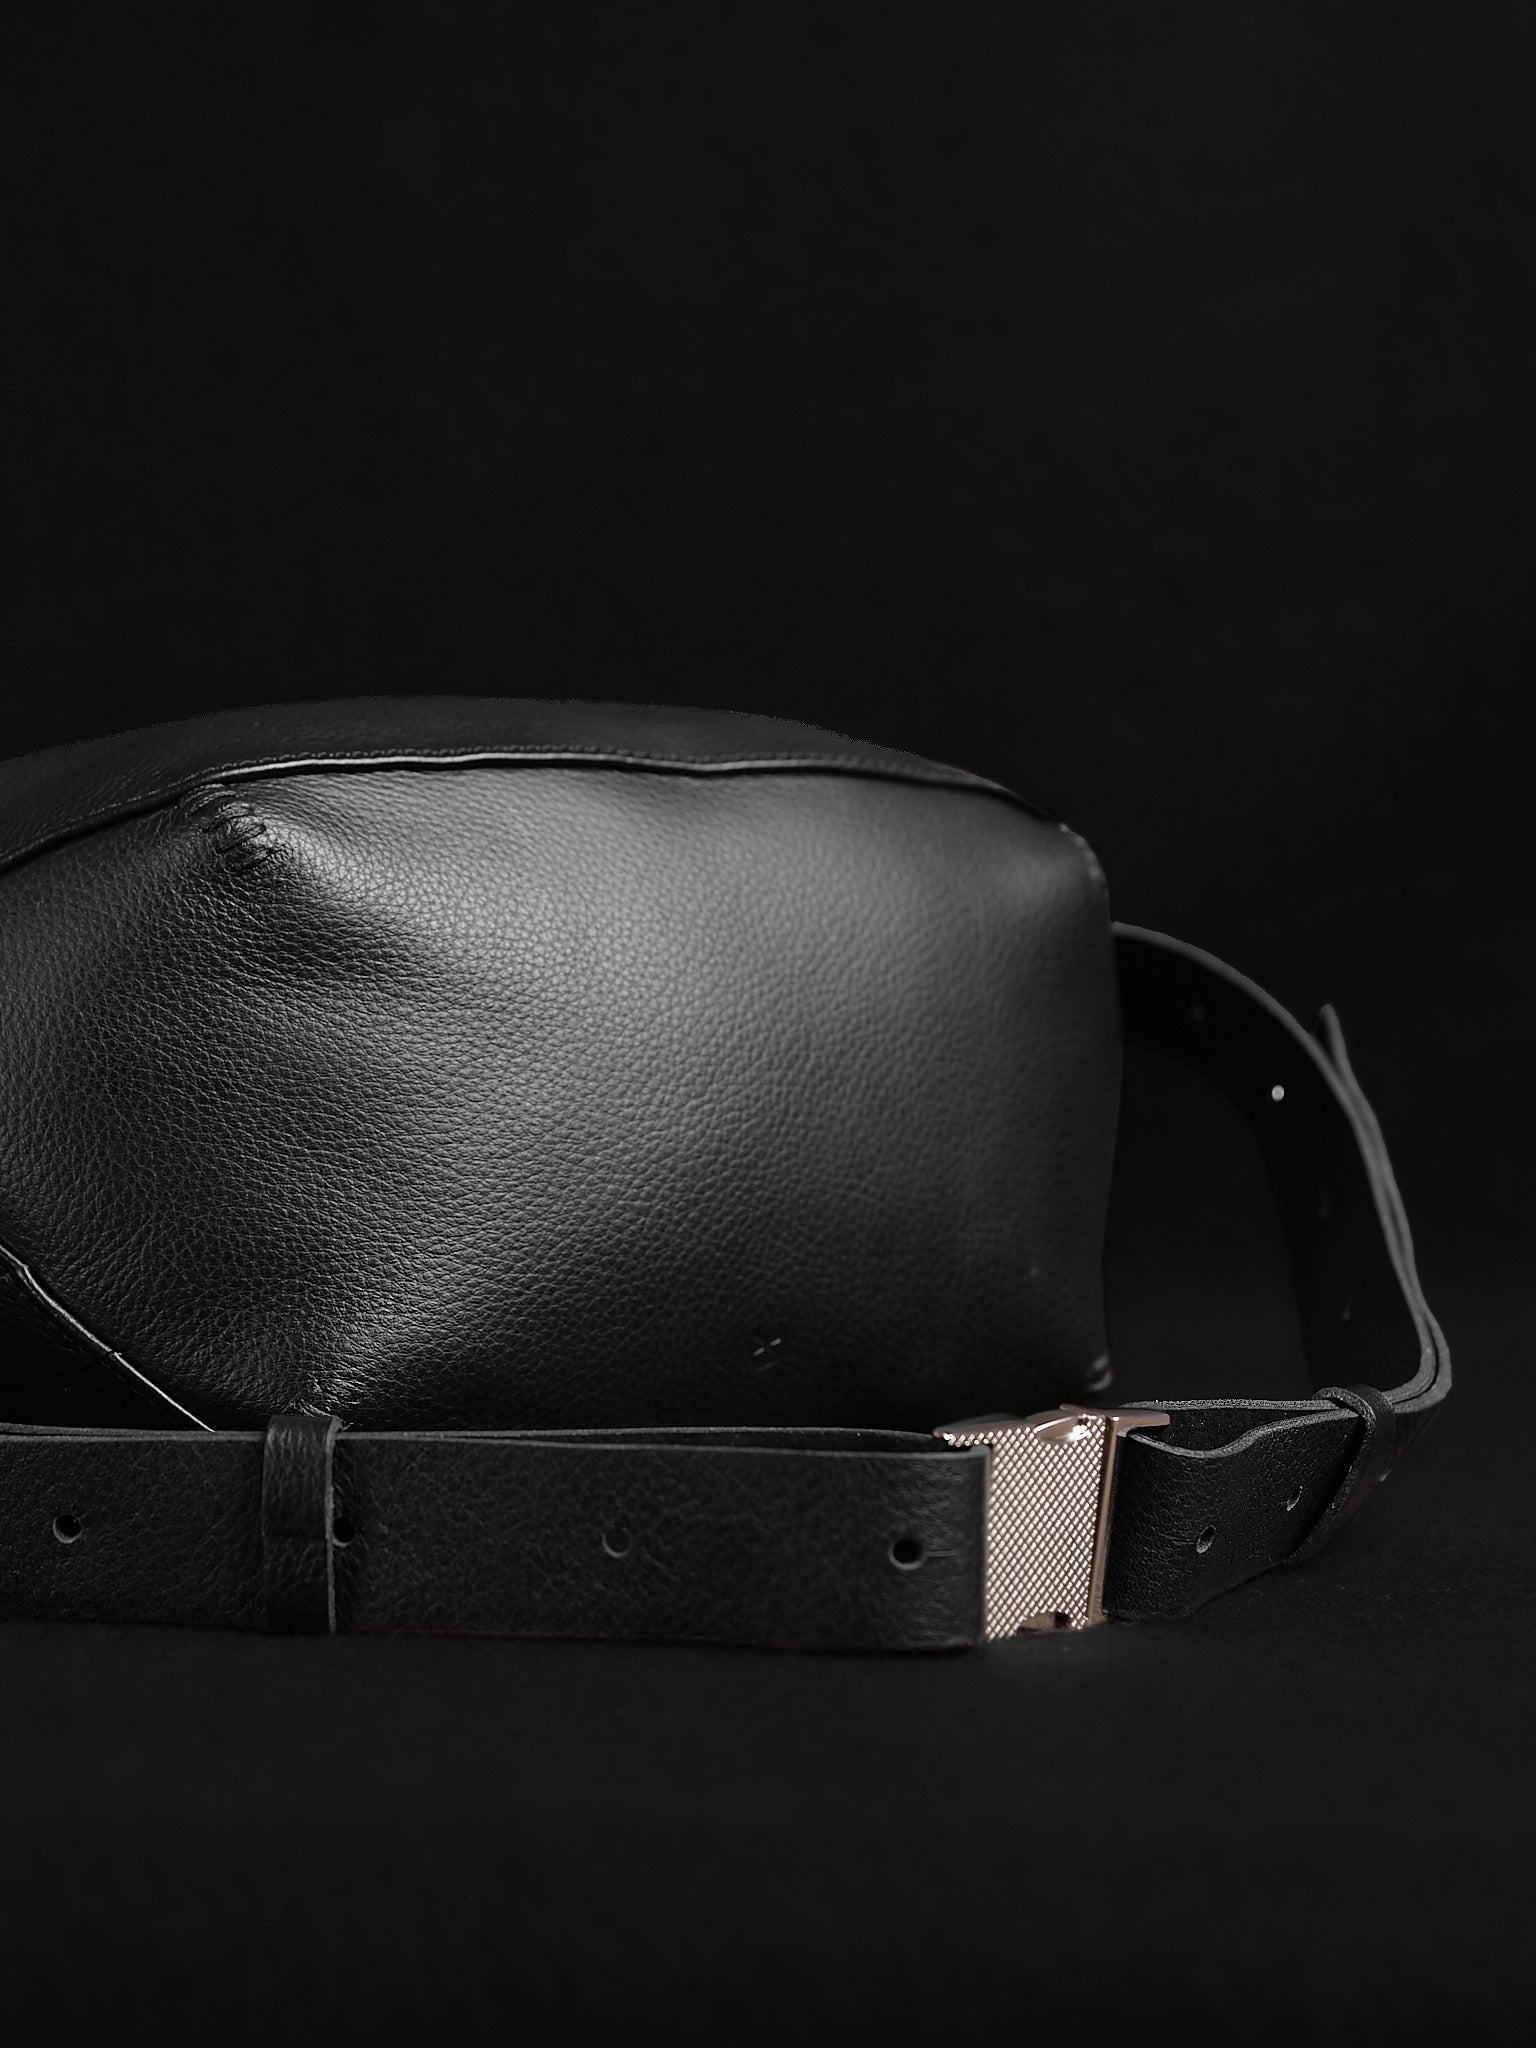 Versatile single strap with release buckle. Shoulder Sling Bag Black by Capra Leather